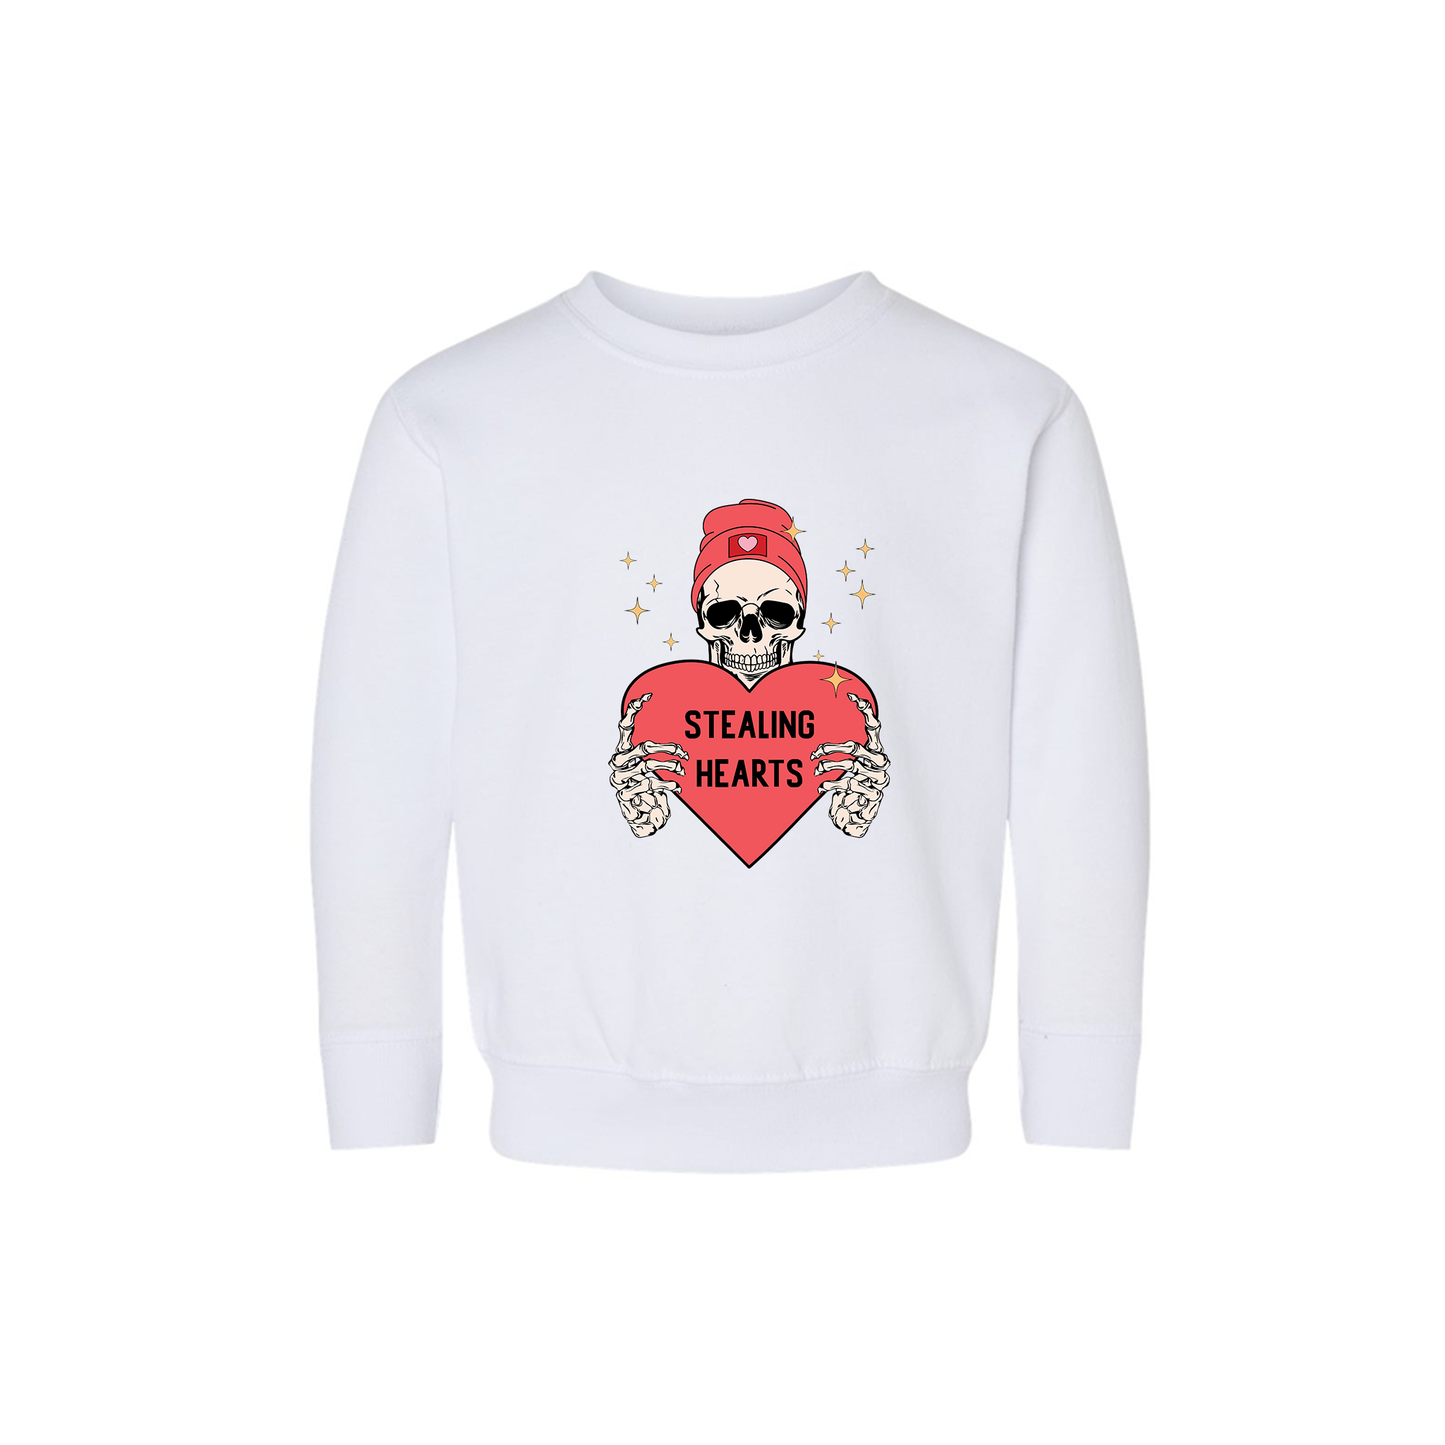 Stealing Hearts - Kids Sweatshirt (White)